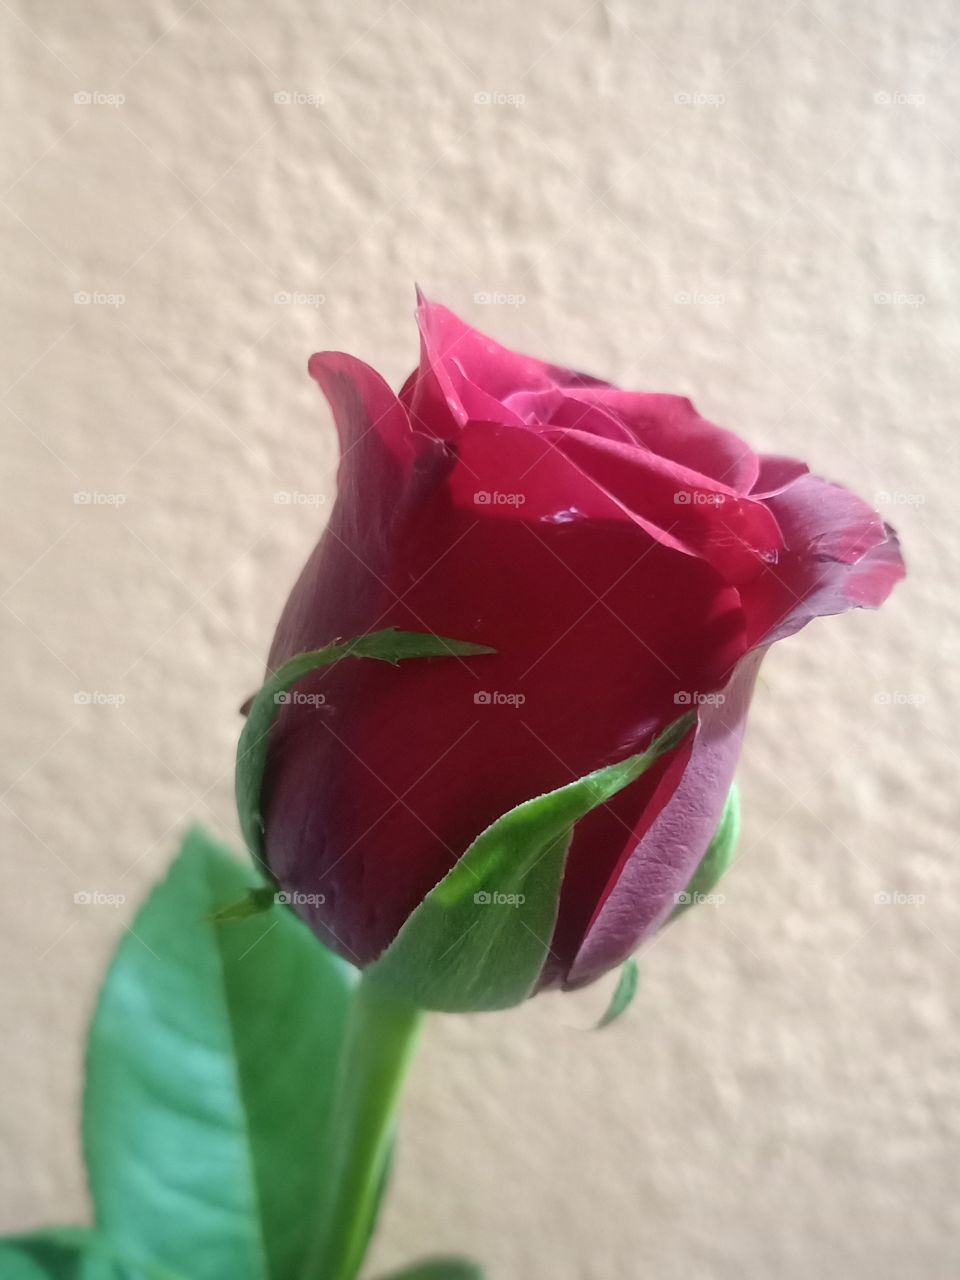 Valentine Rose